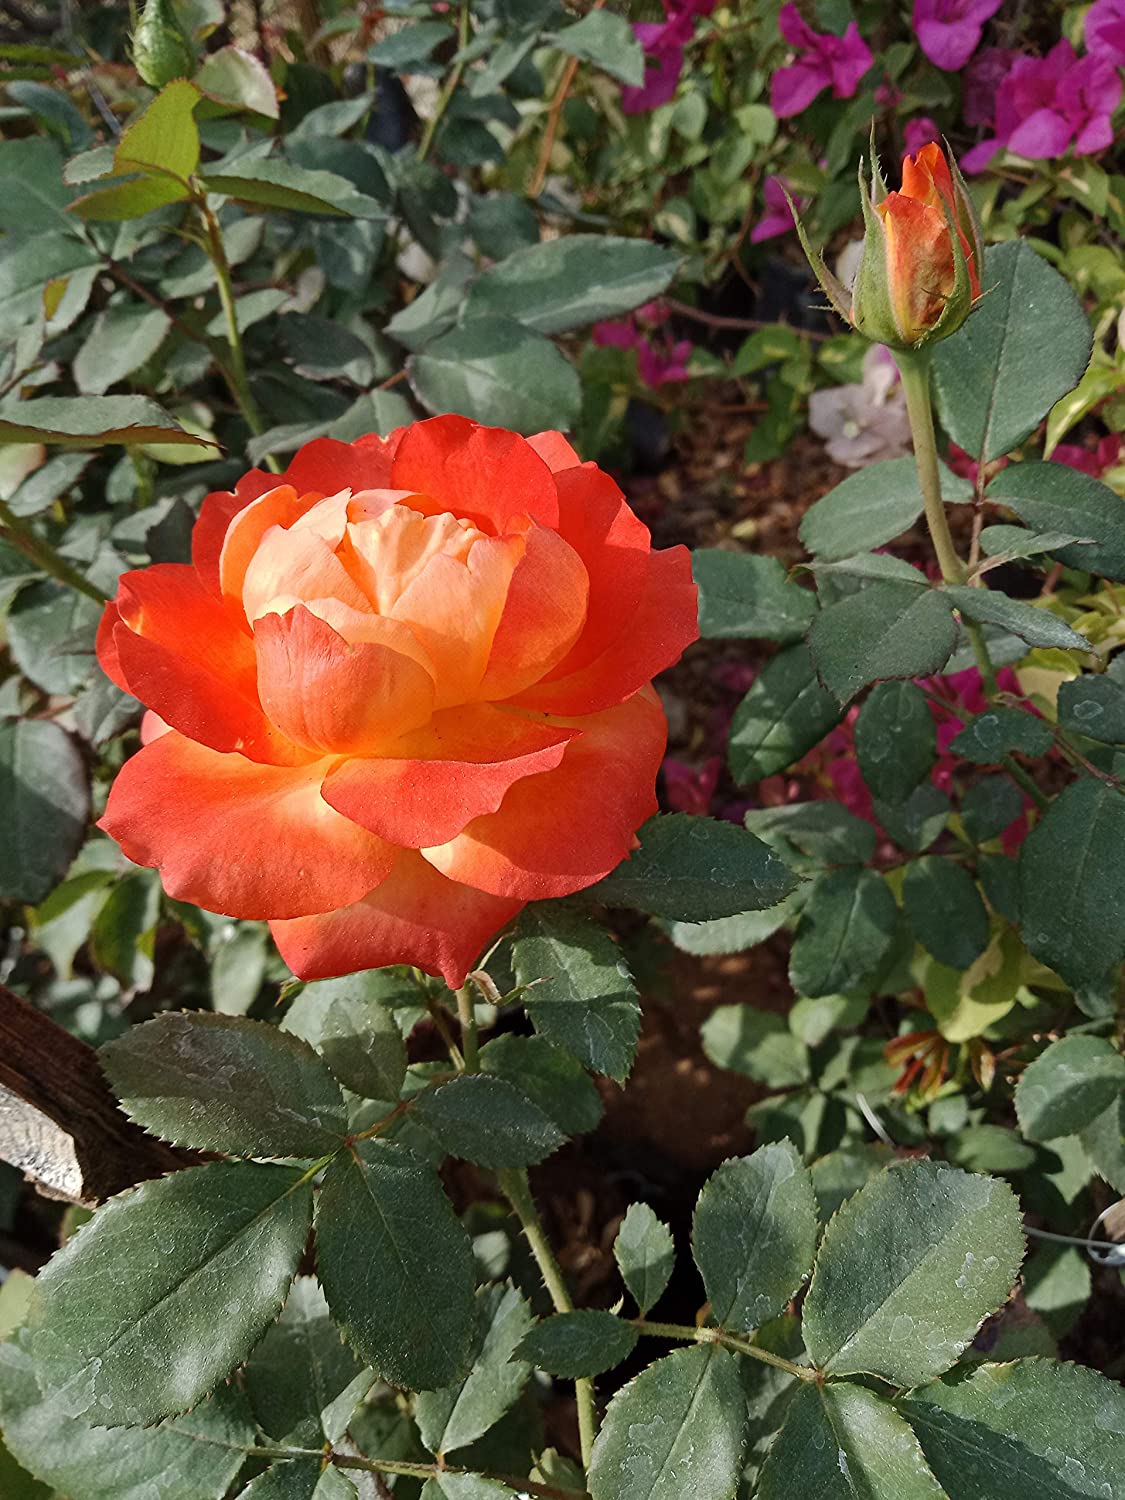 Exclusive Live Orange climbing rose Plant